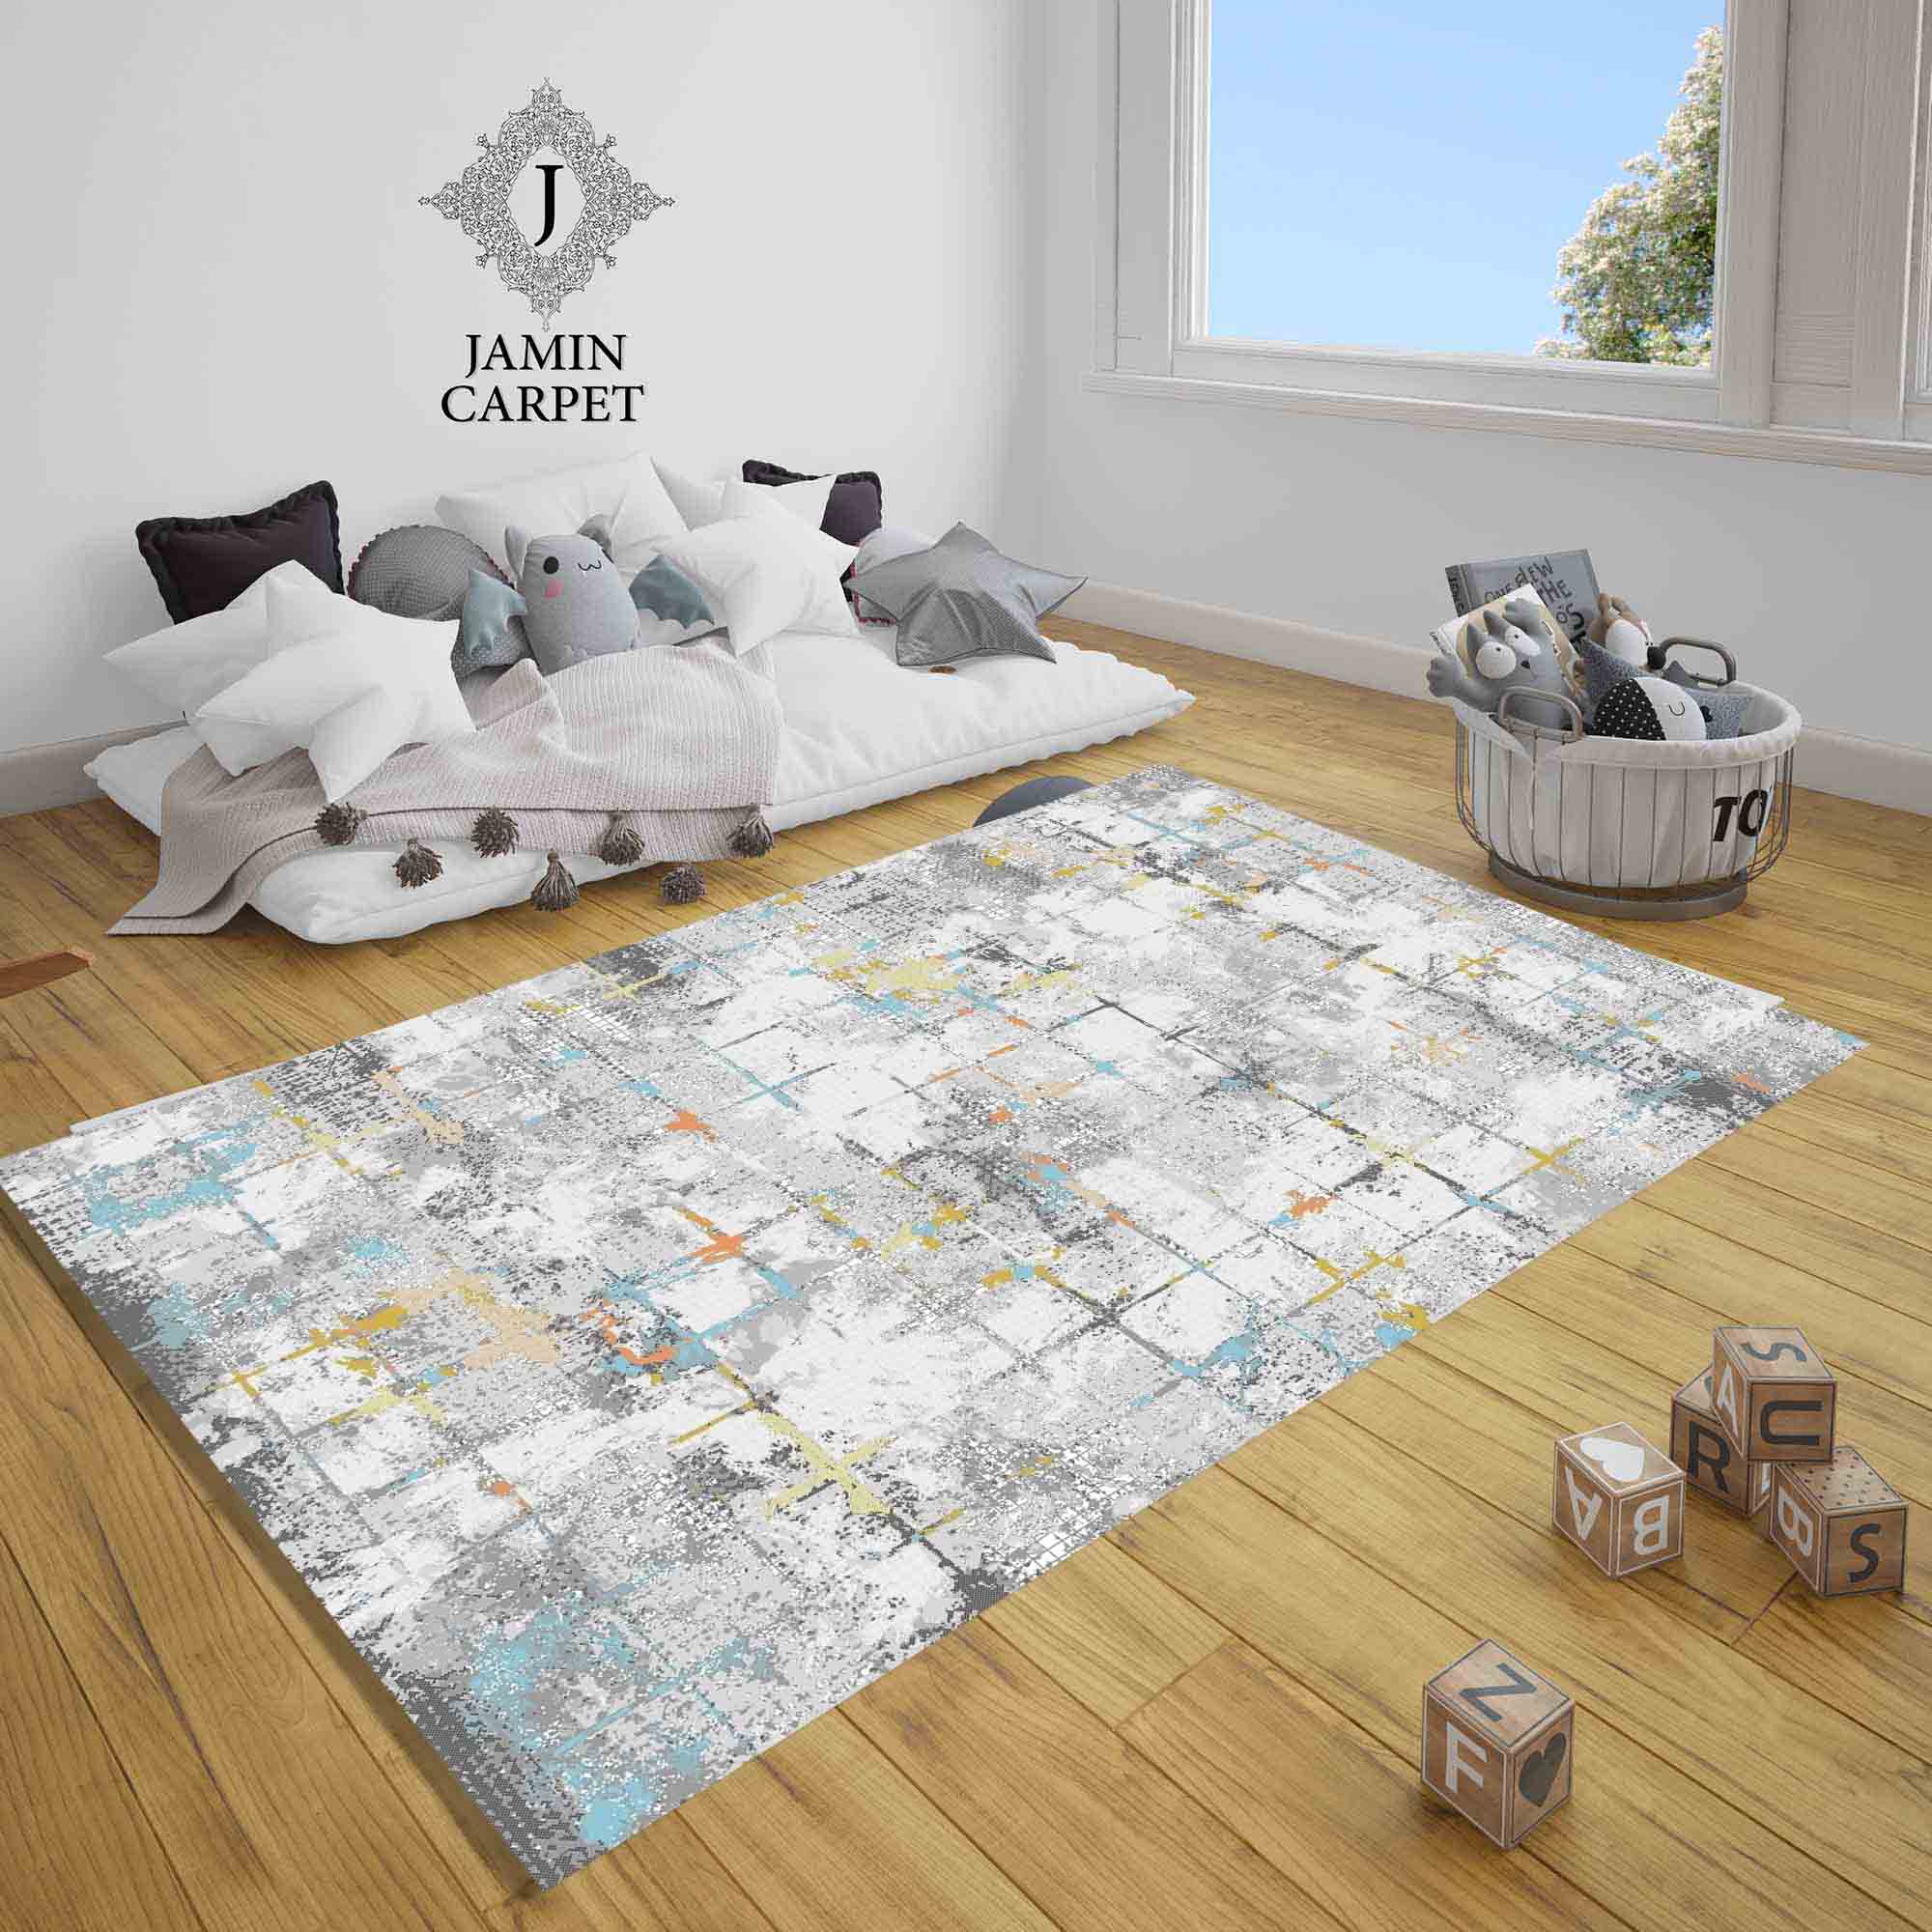 Fantasy carpet code 213 comb 400 density 1800 all acrylic